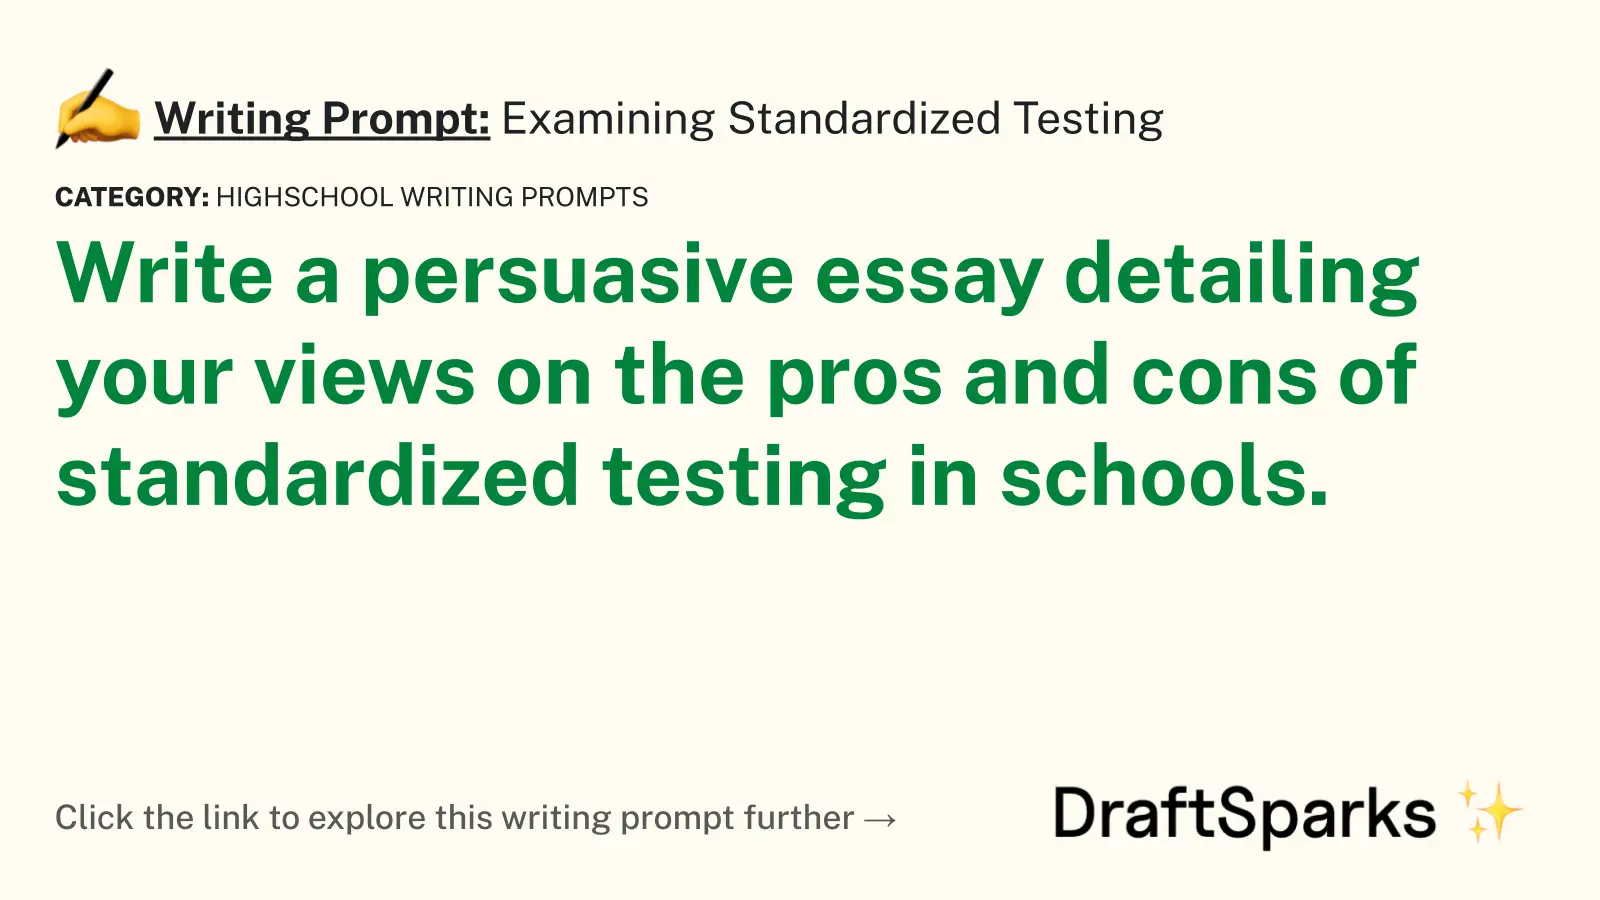 Examining Standardized Testing